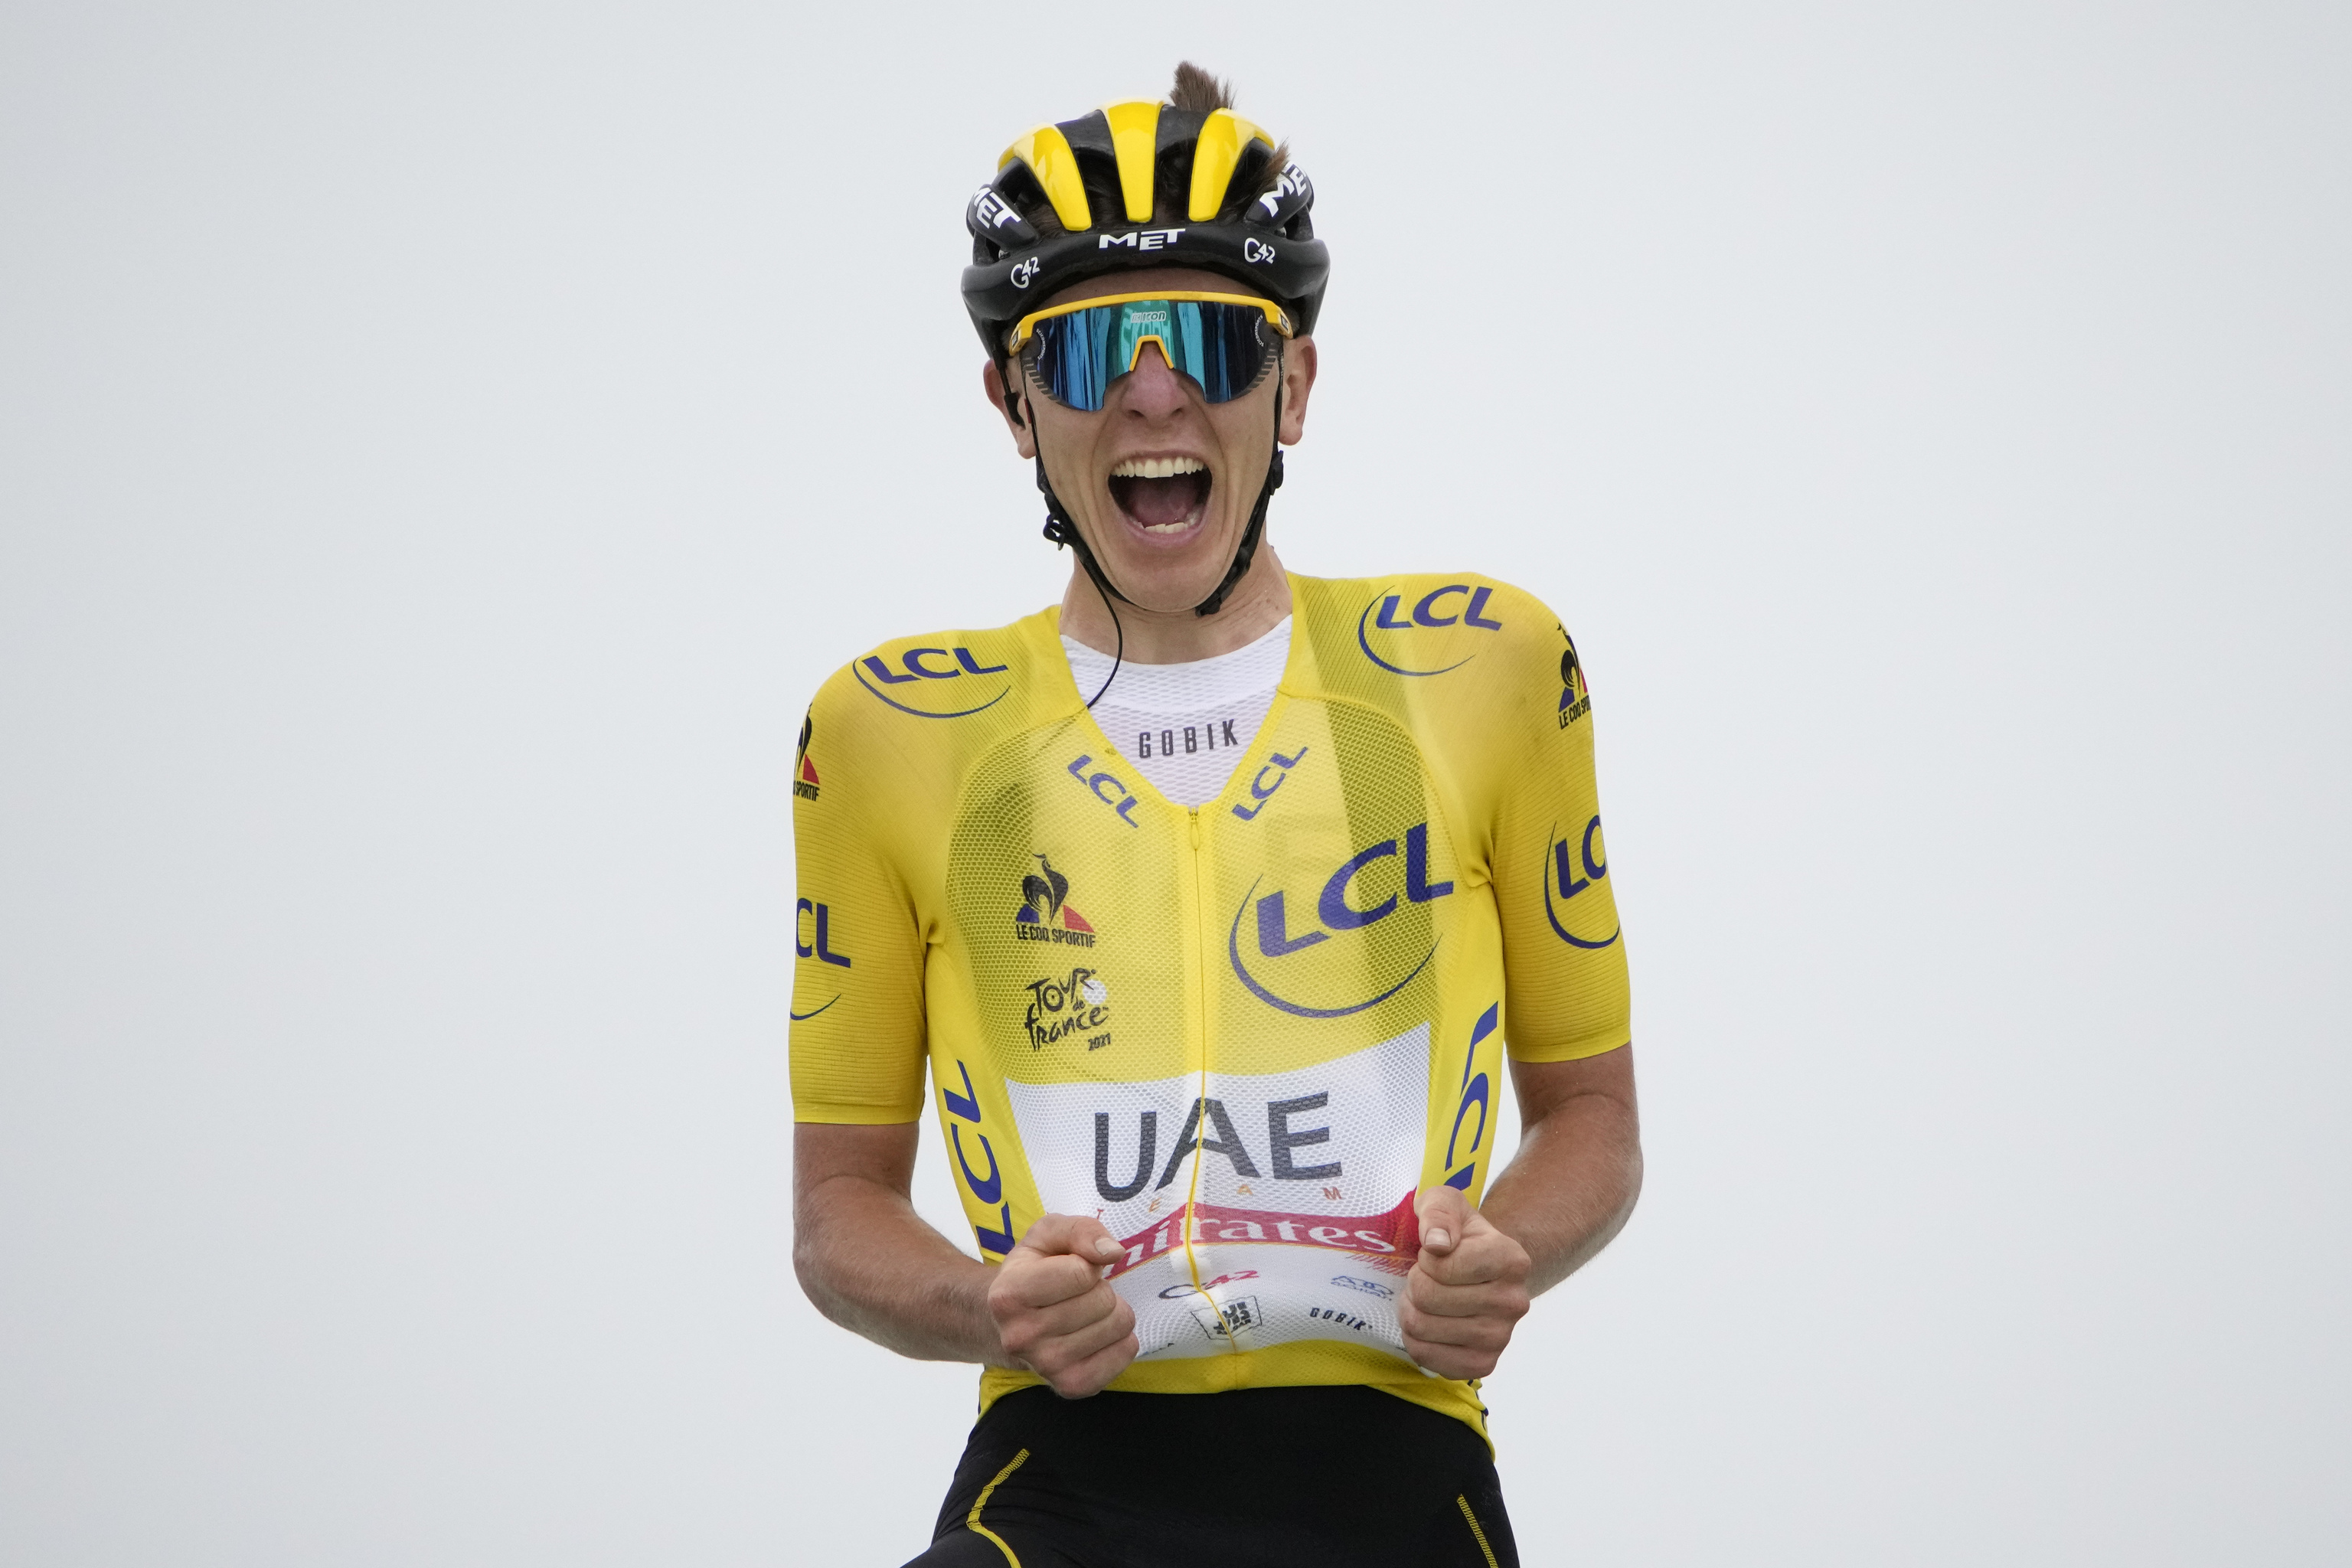 organize Maladroit save Tour de Francia: Gobik, el secreto de Pogacar bajo el maillot amarillo es  una empresa de Murcia | Tour de Francia 2021